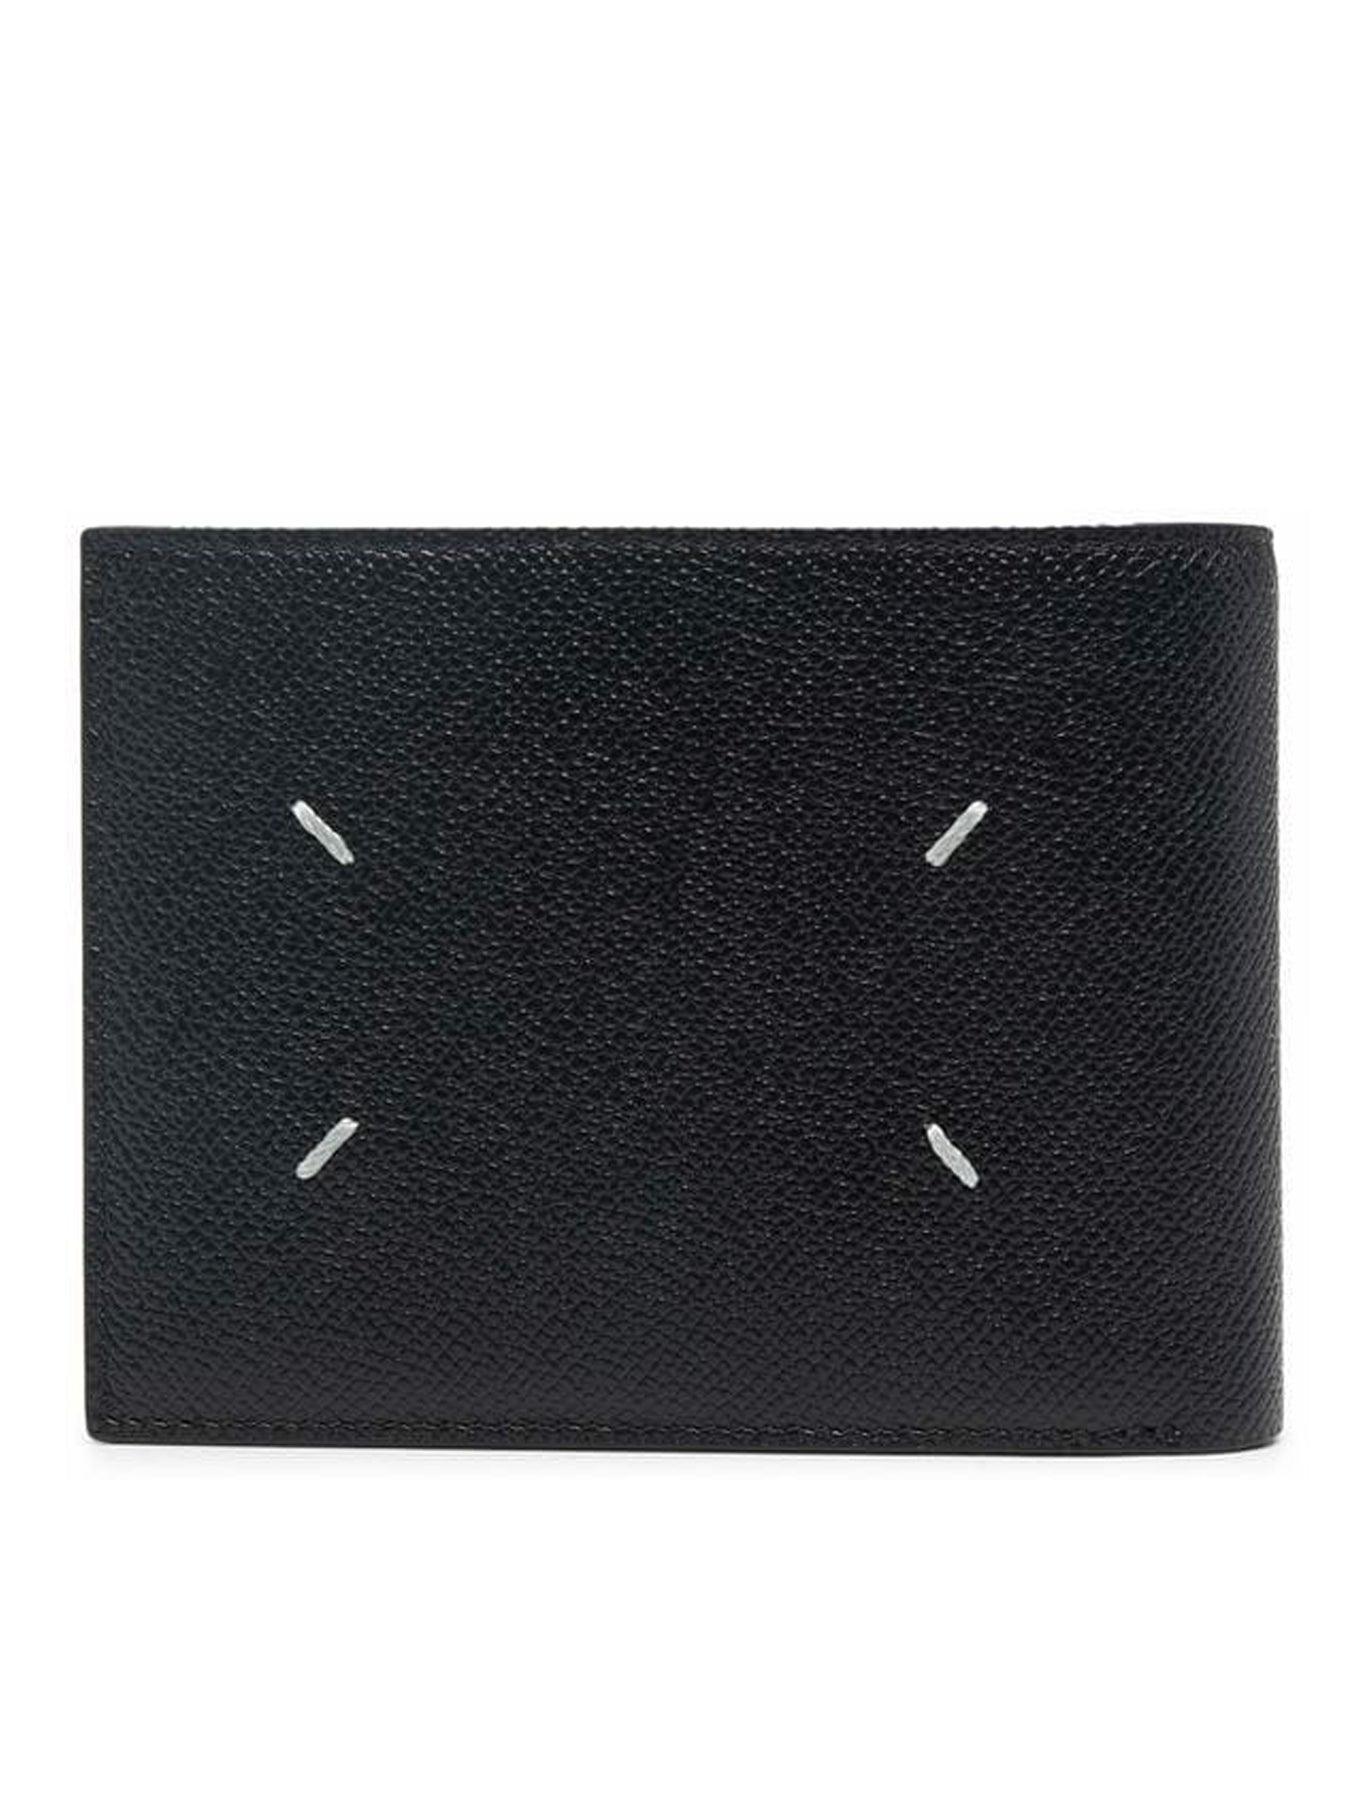 four-stitch logo wallet